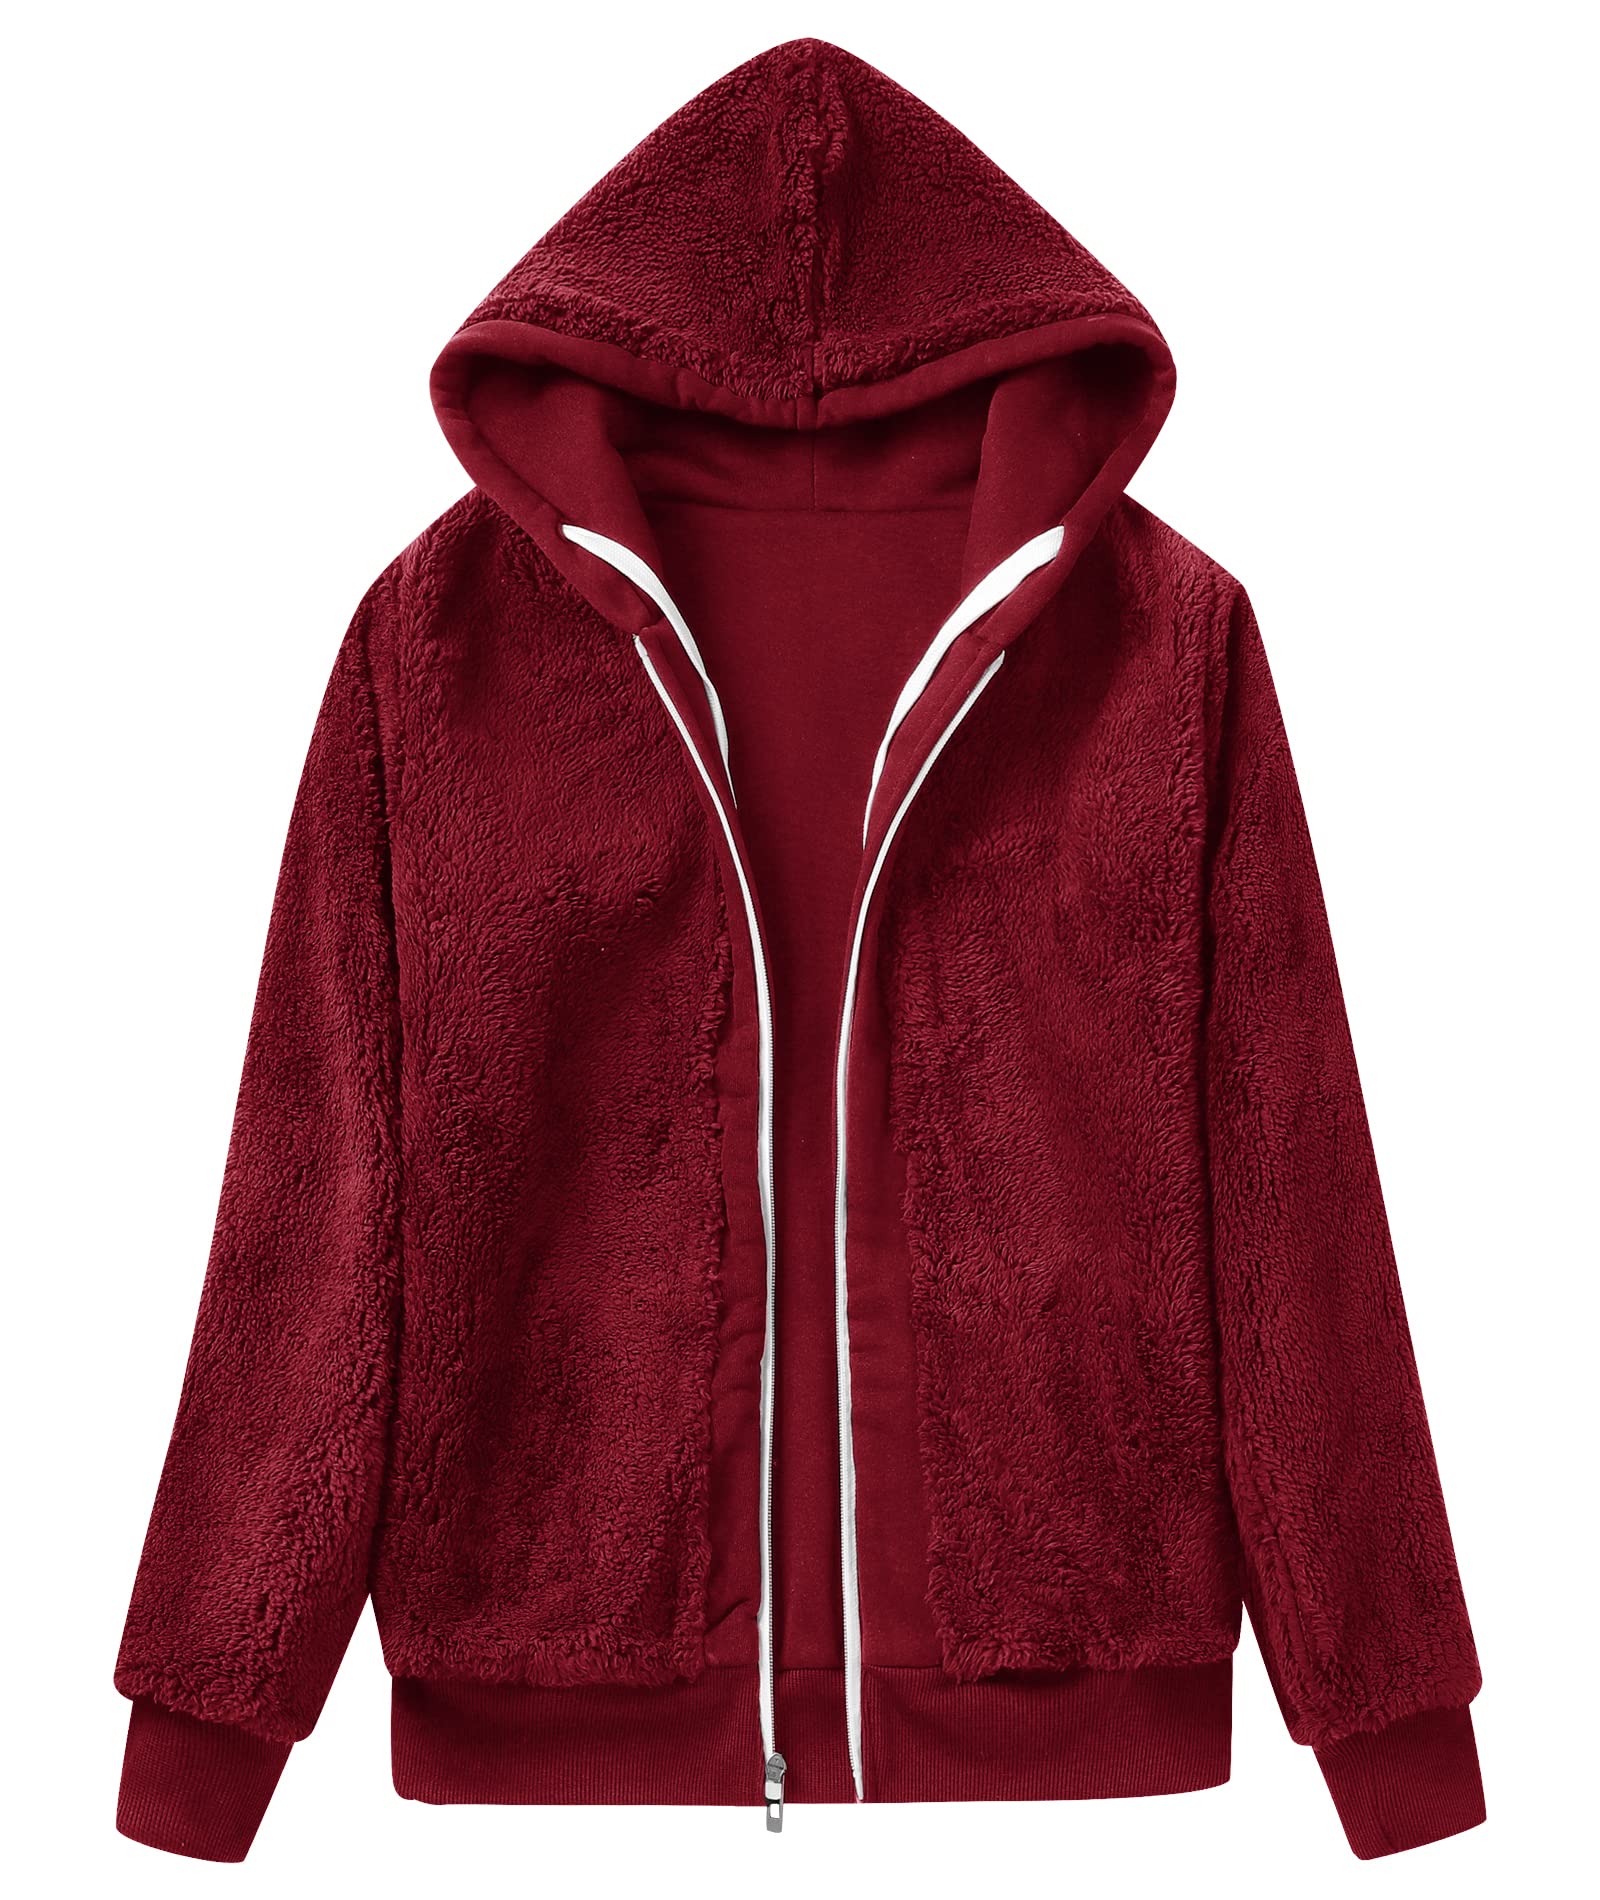 Buy SWISSWELL Hoodies for Women Winter Fleece Sweatshirt - Full Zip Up  Thick Sherpa Lined, 006-black(fleece Lined Sleeves), X-Large at